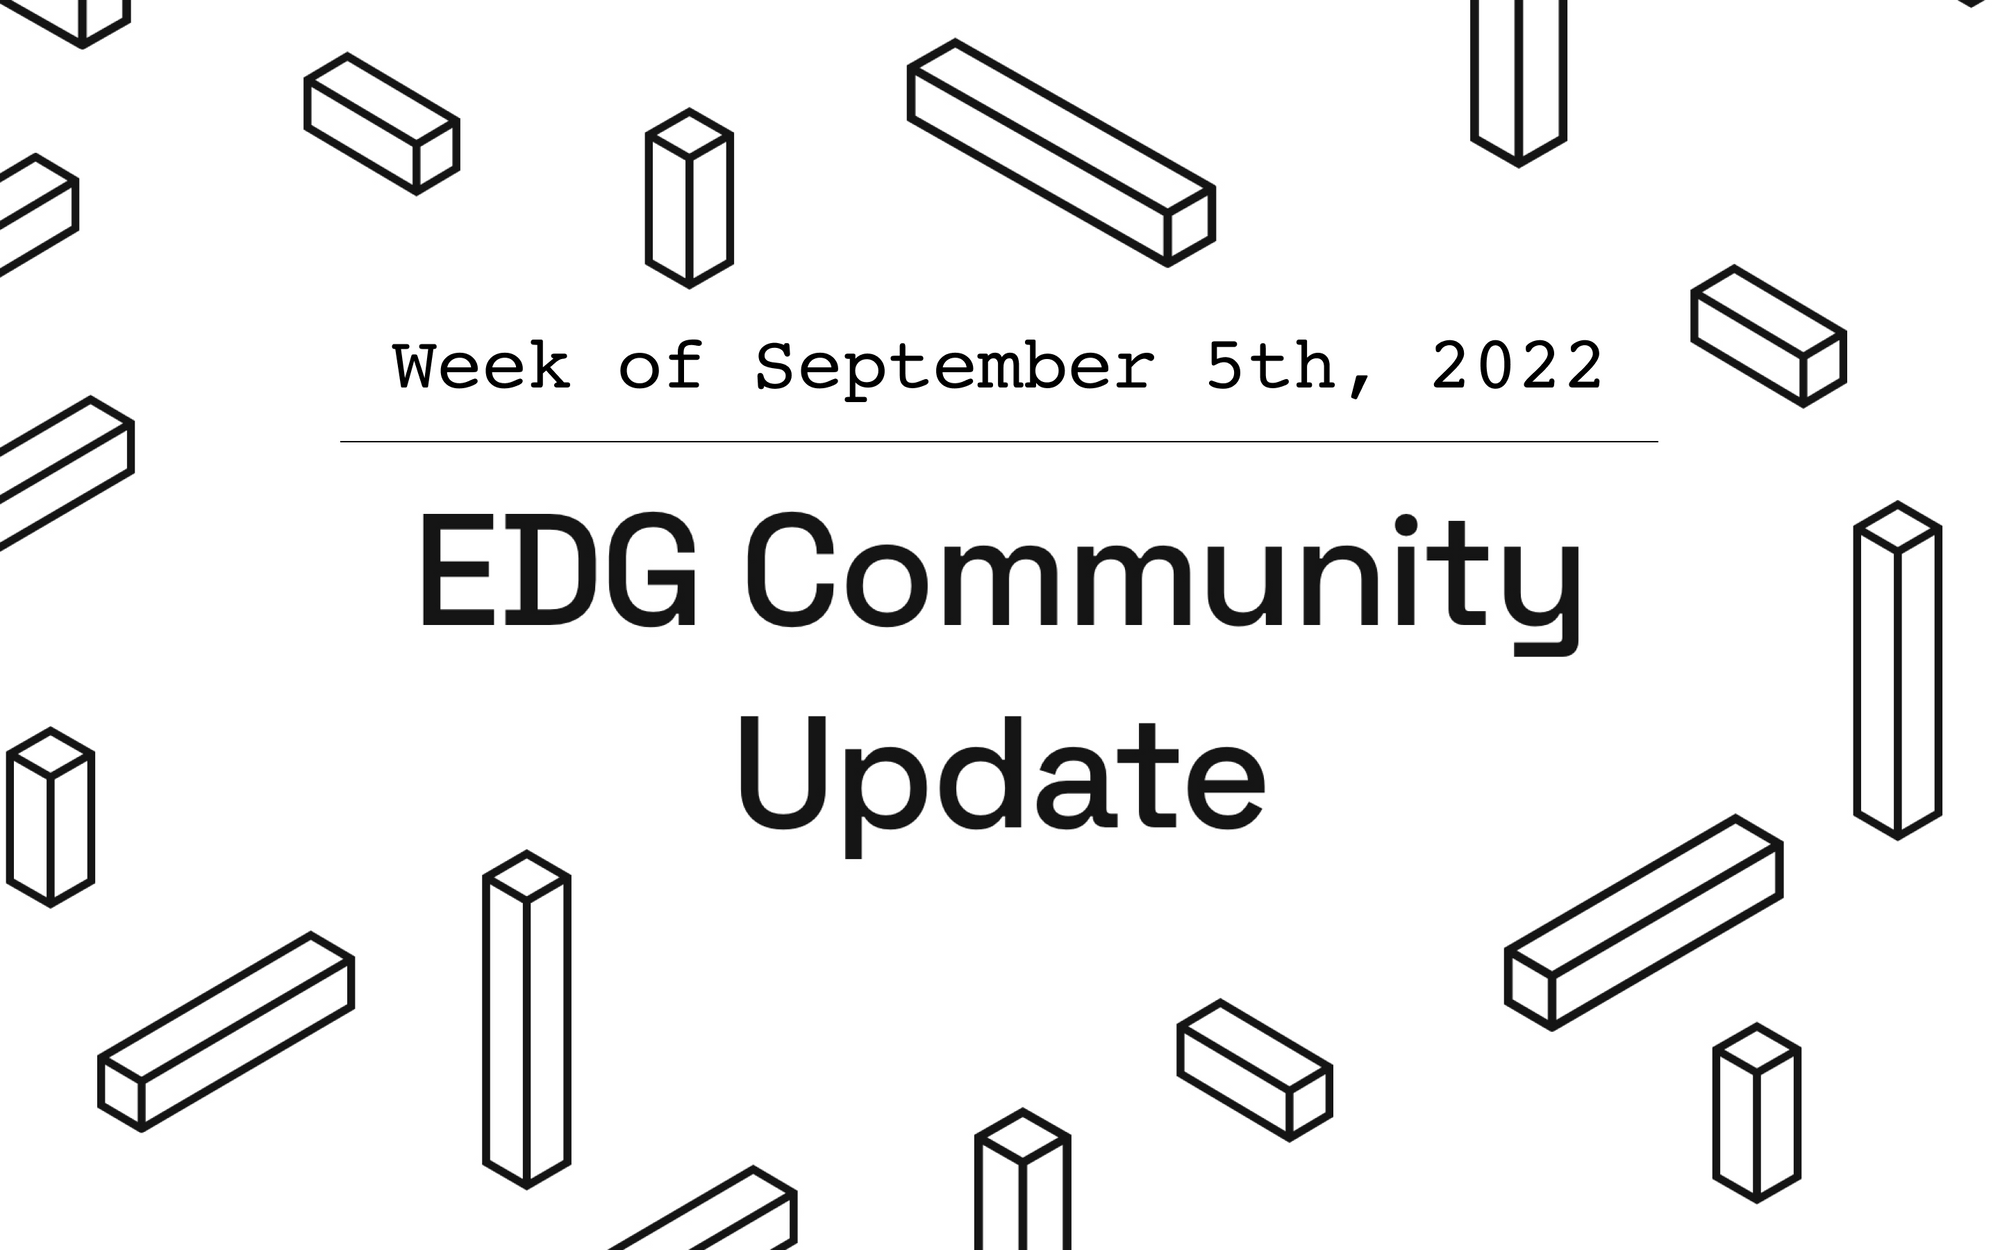 EDG Community Update: Week of September 5th, 2022